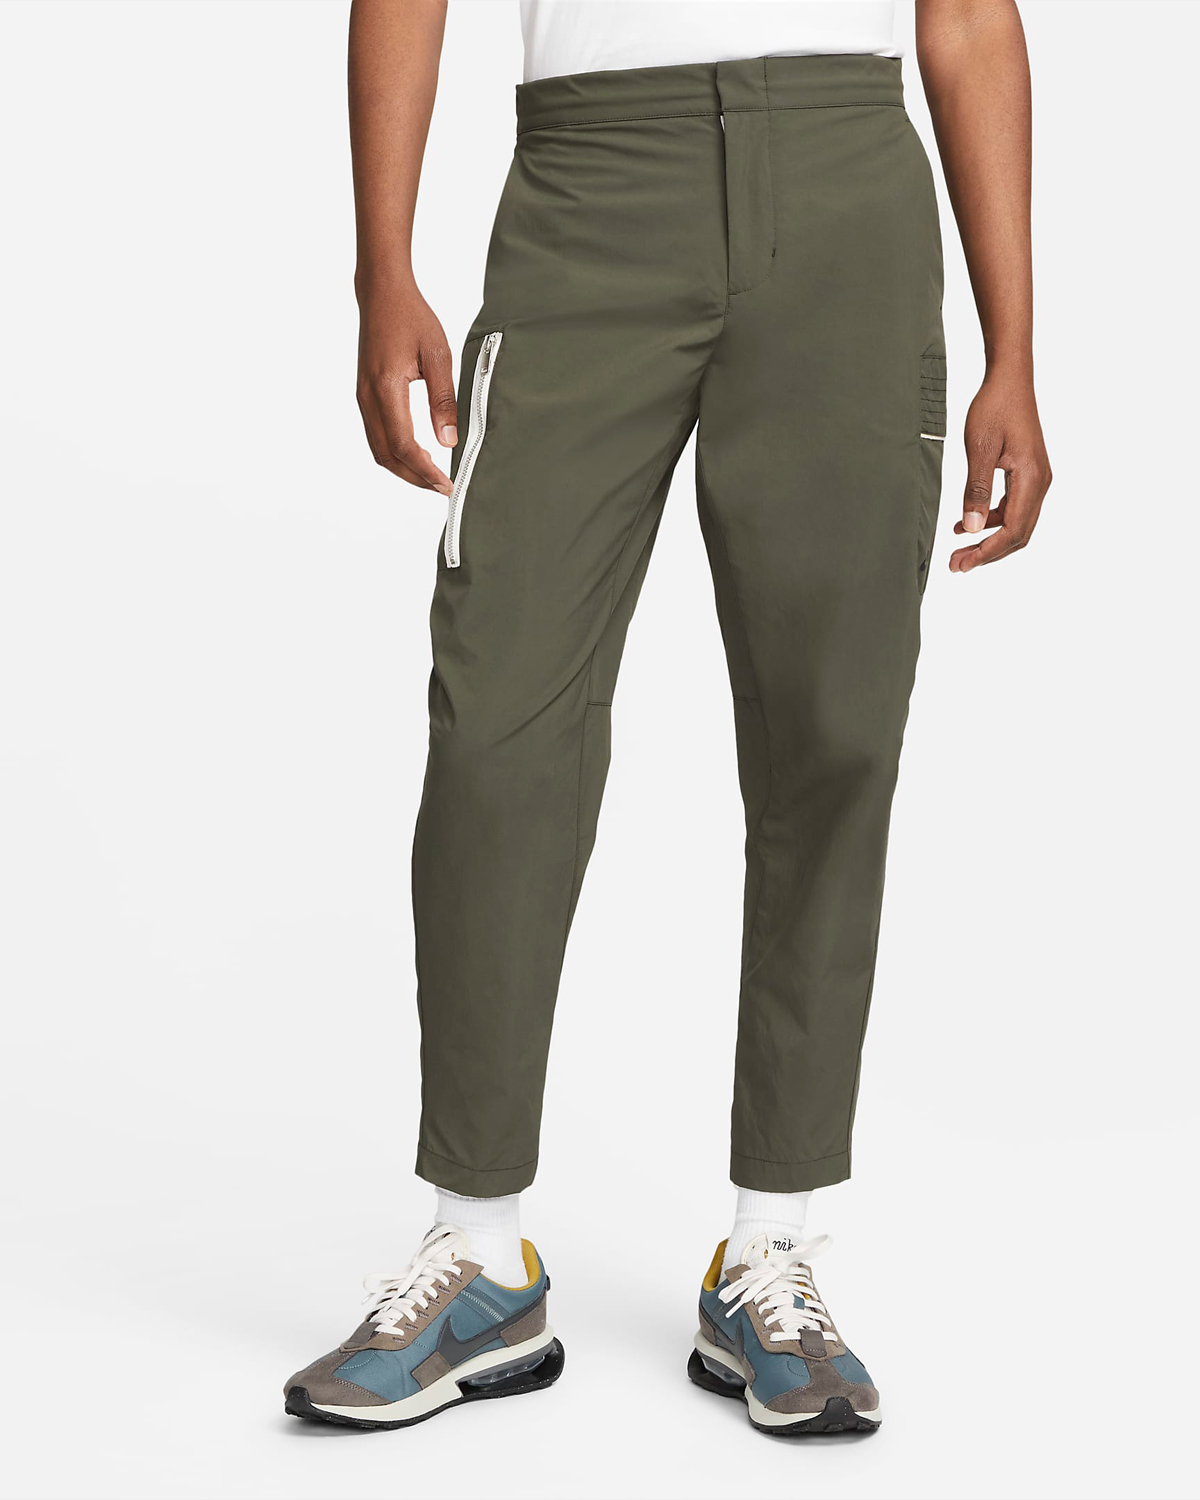 Nike-Sportswear-Essentials-Utility-Pants-Sequoia-1